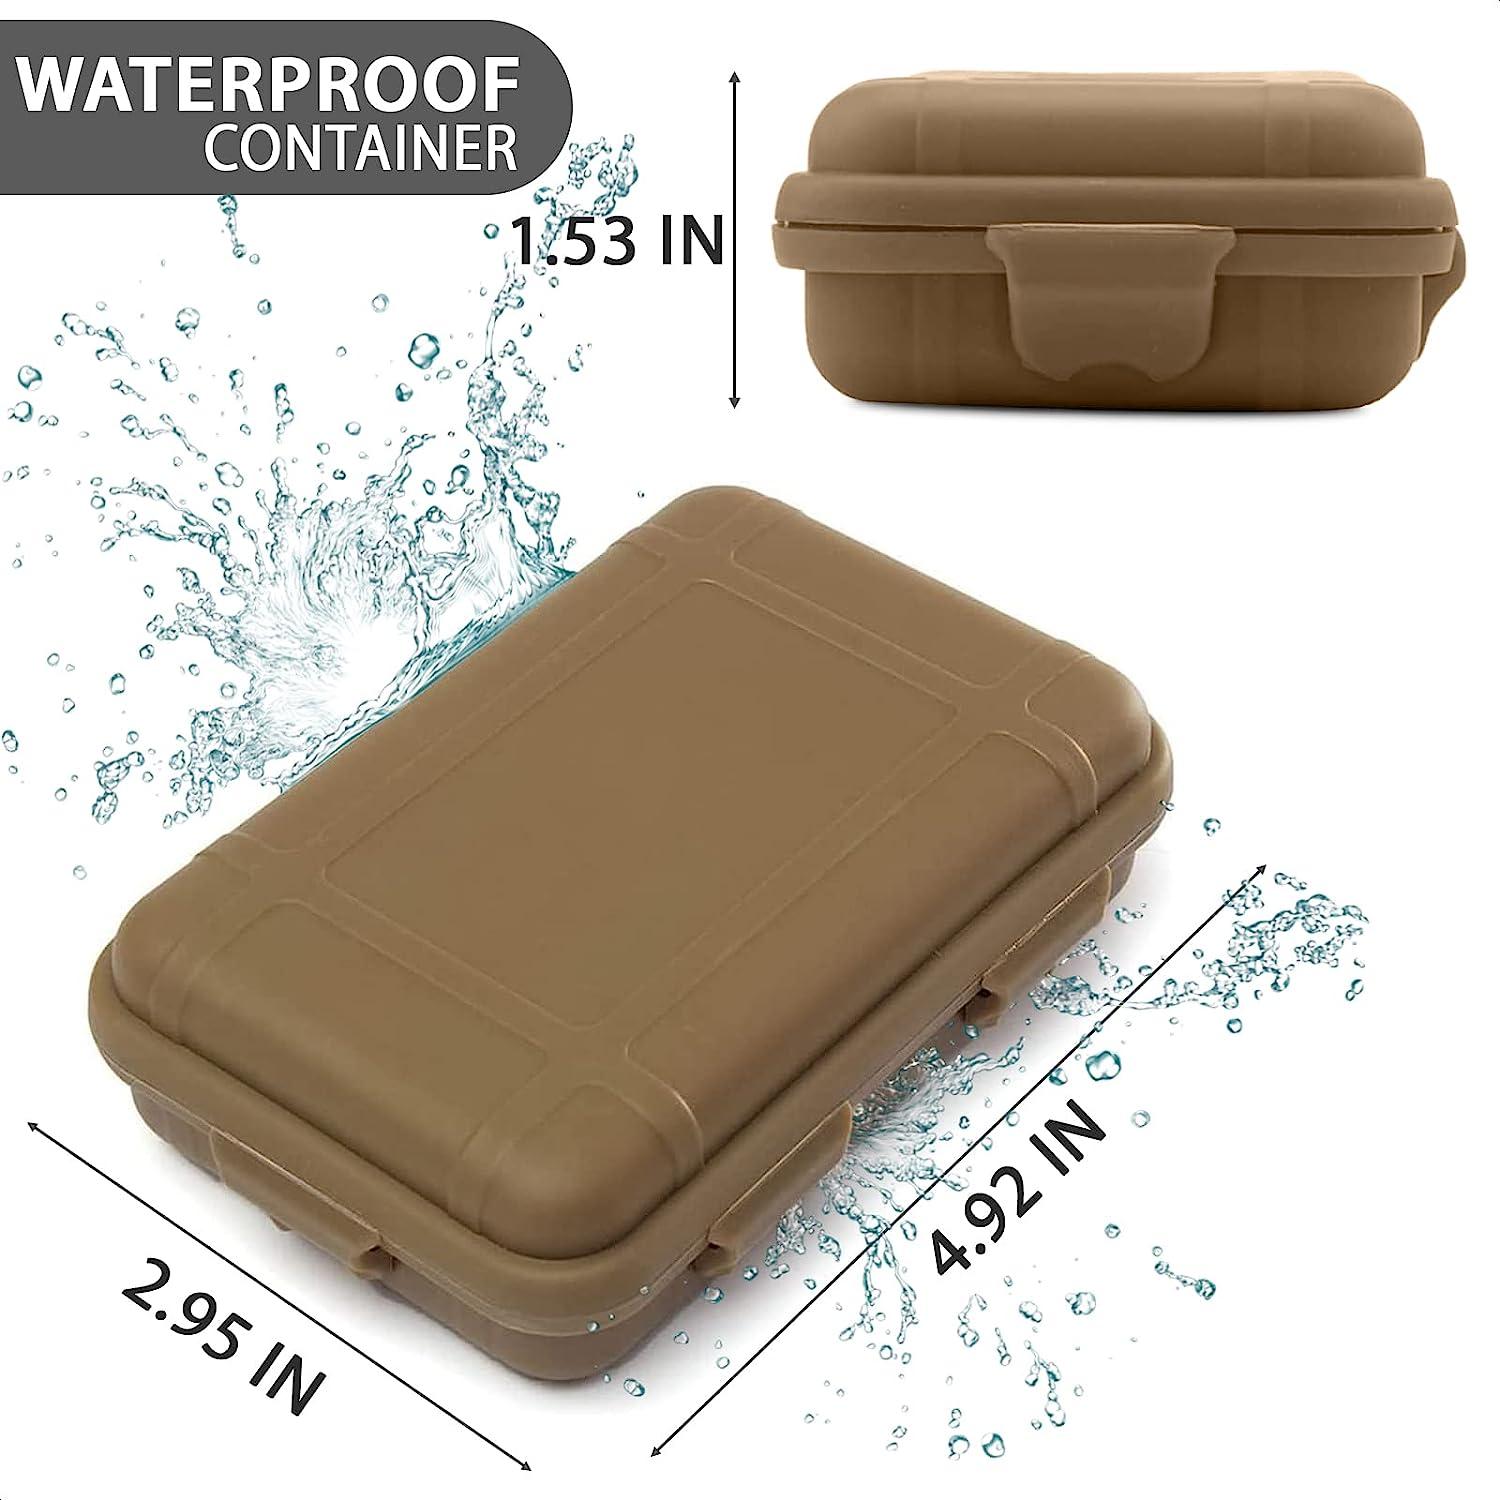 Small Plastic Case Waterproof Tool Box rigid Suitcase Shockproof